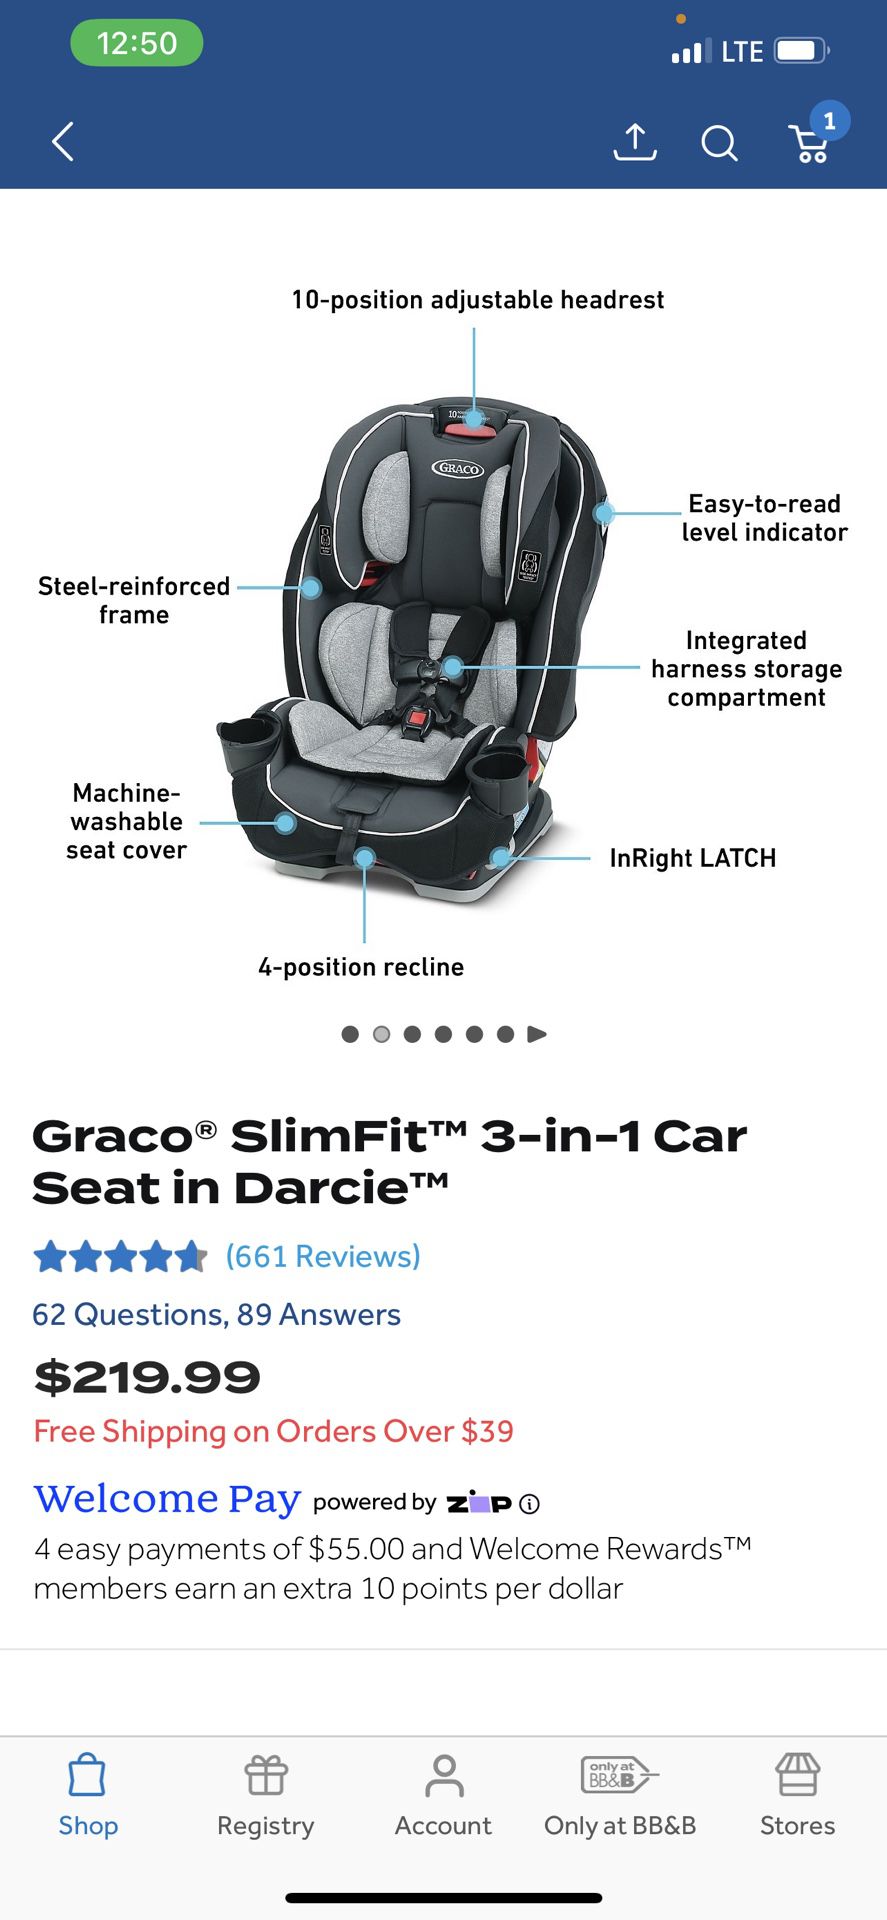 Graco Slimfit 3-in-1 Car Seat in Darcie